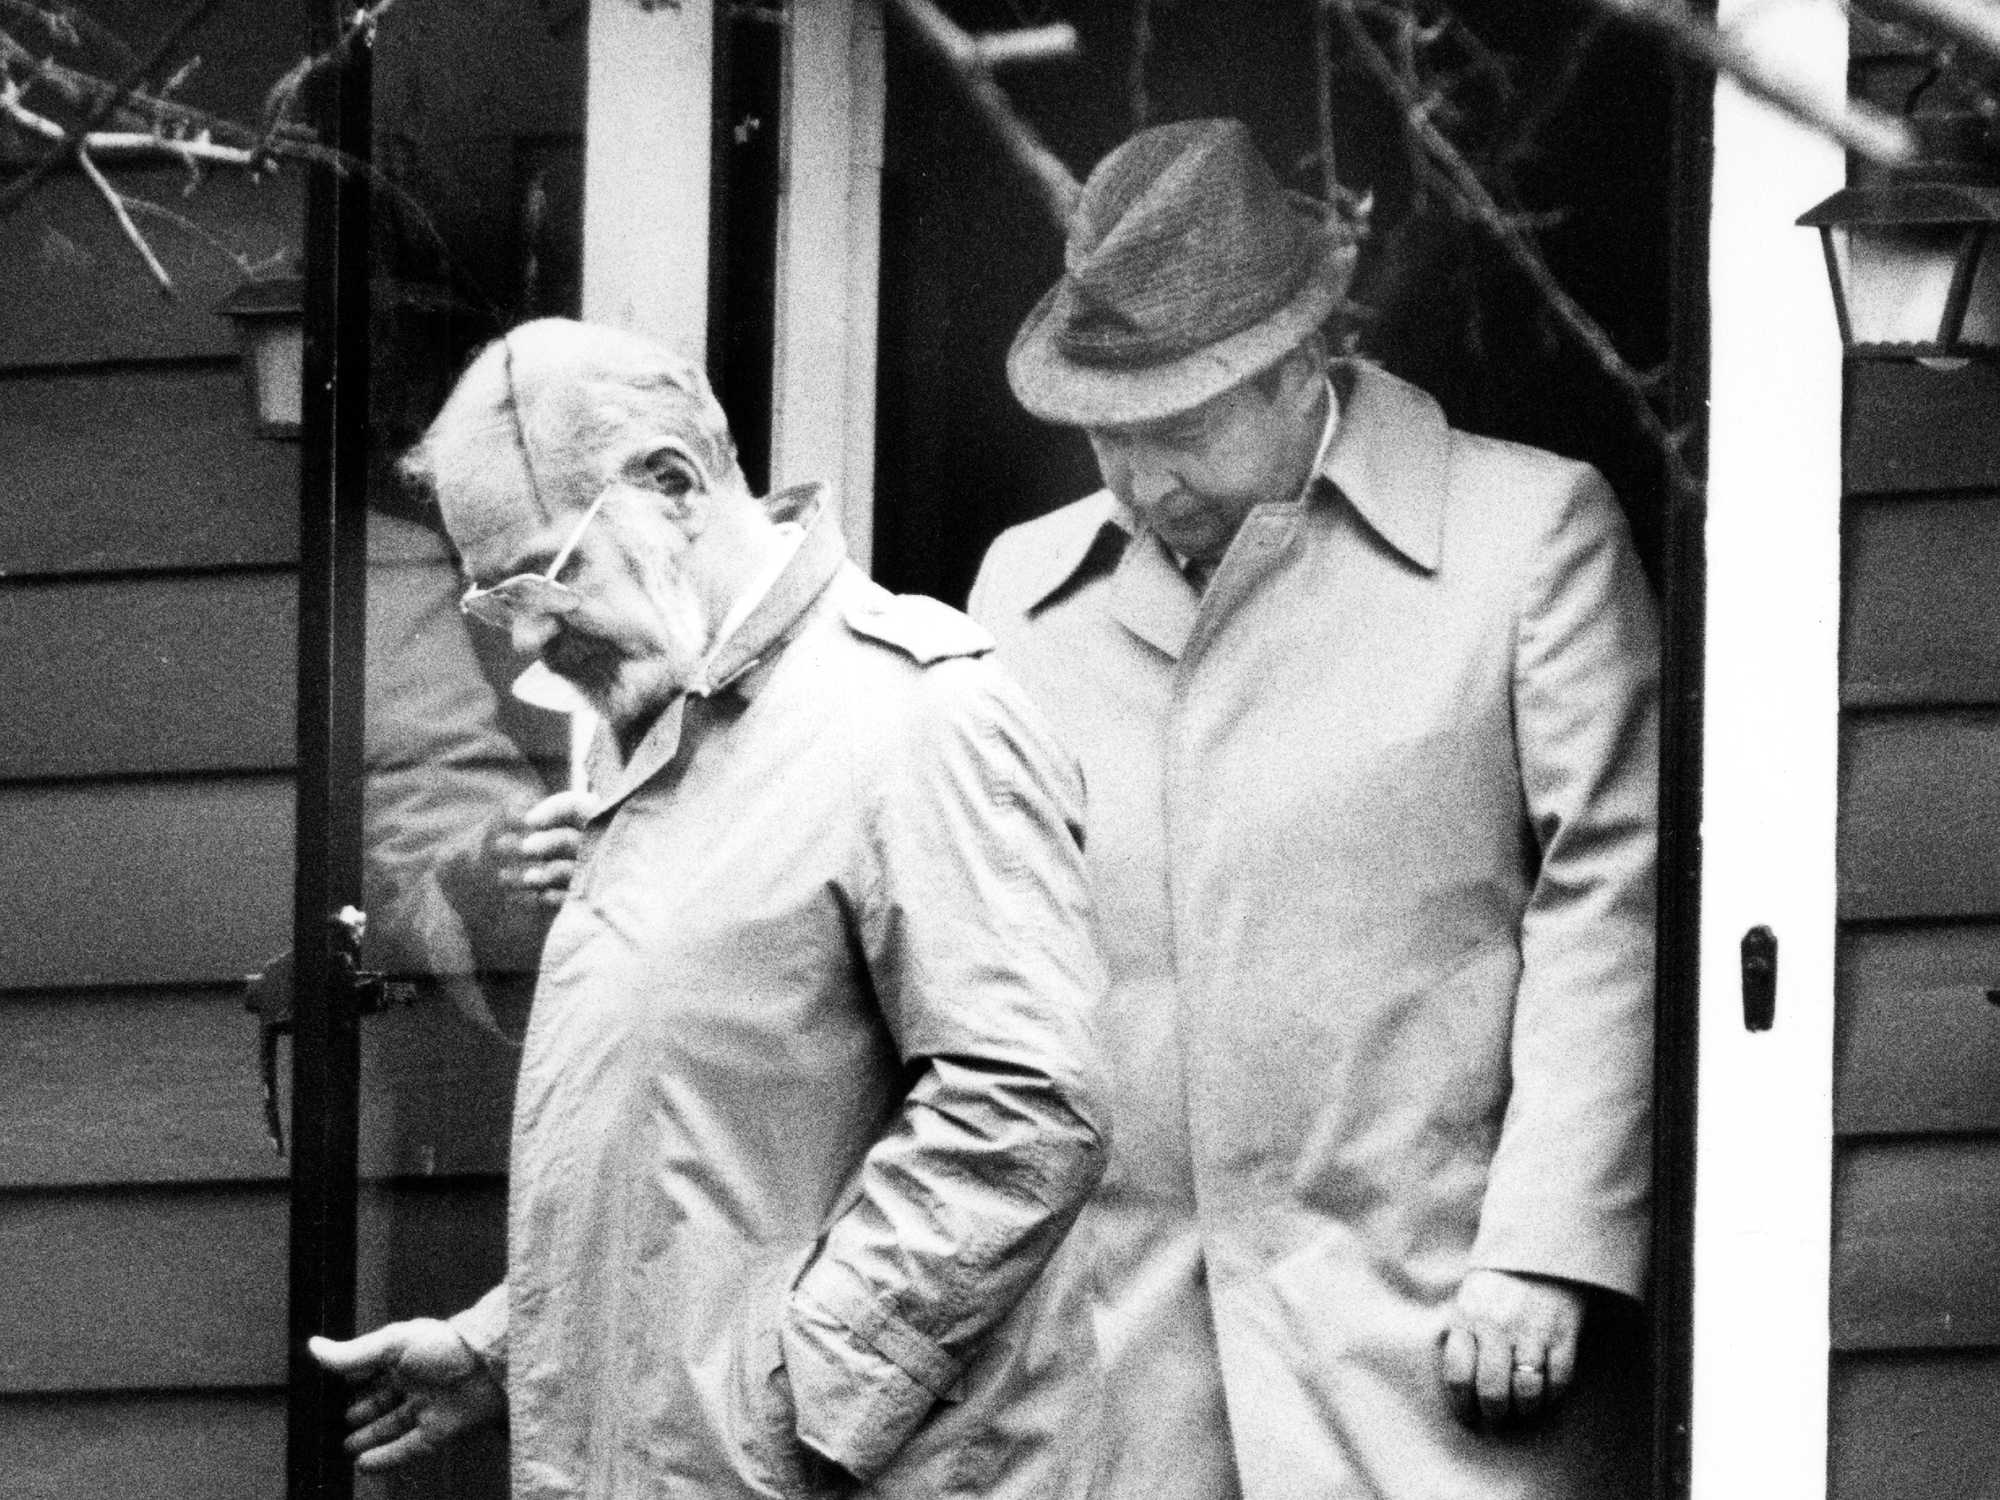  Boston police detectives departed the Stuart family home on Jan. 7, 1990.